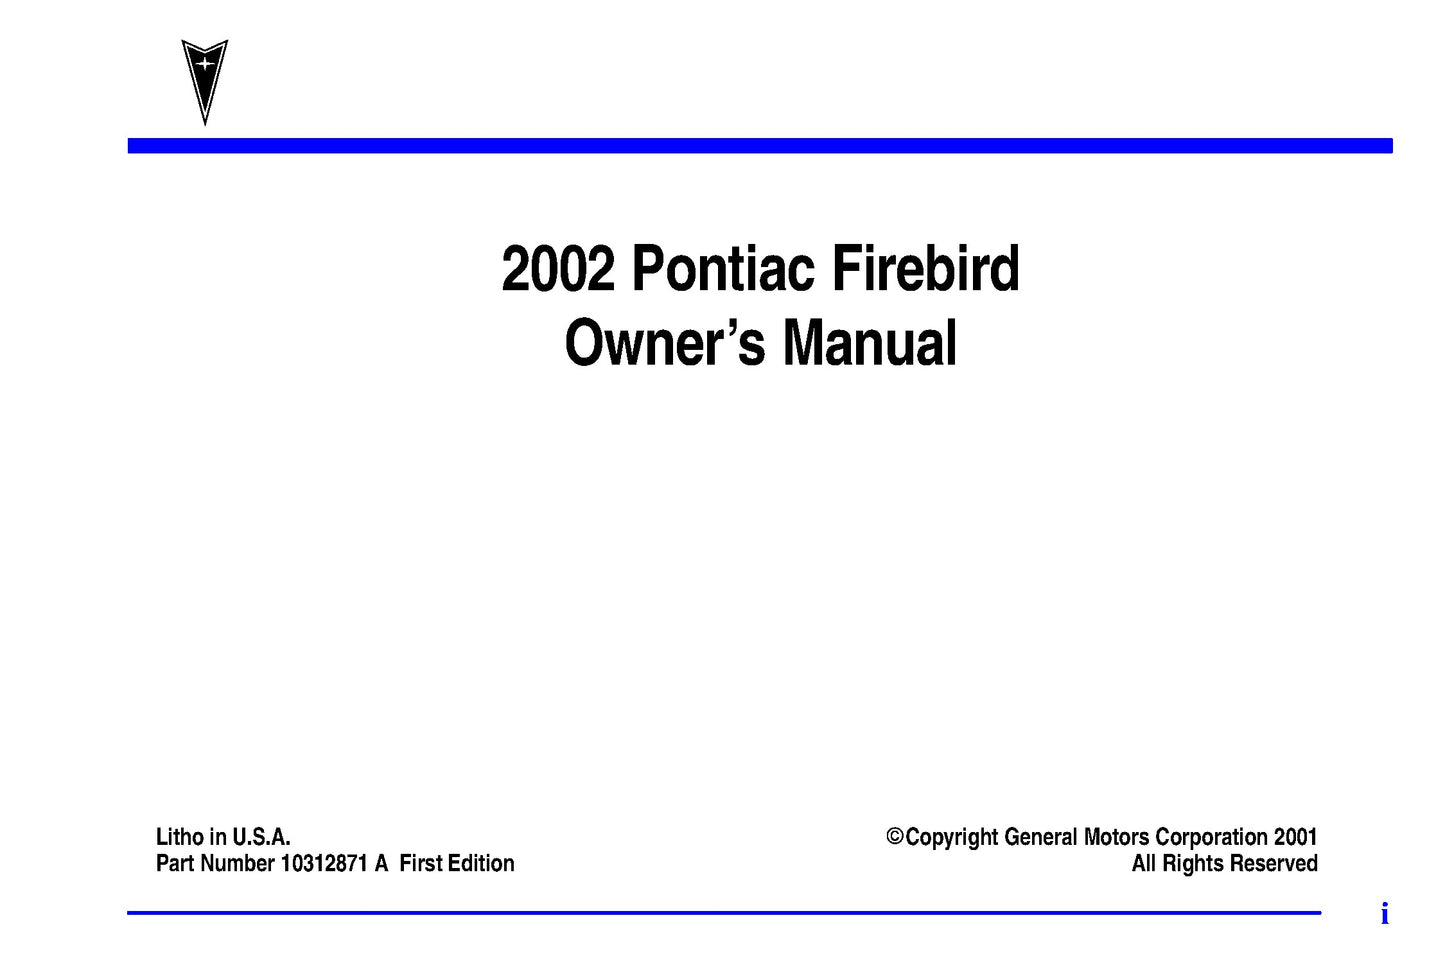 2002 Pontiac Firebird Gebruikershandleiding | Engels